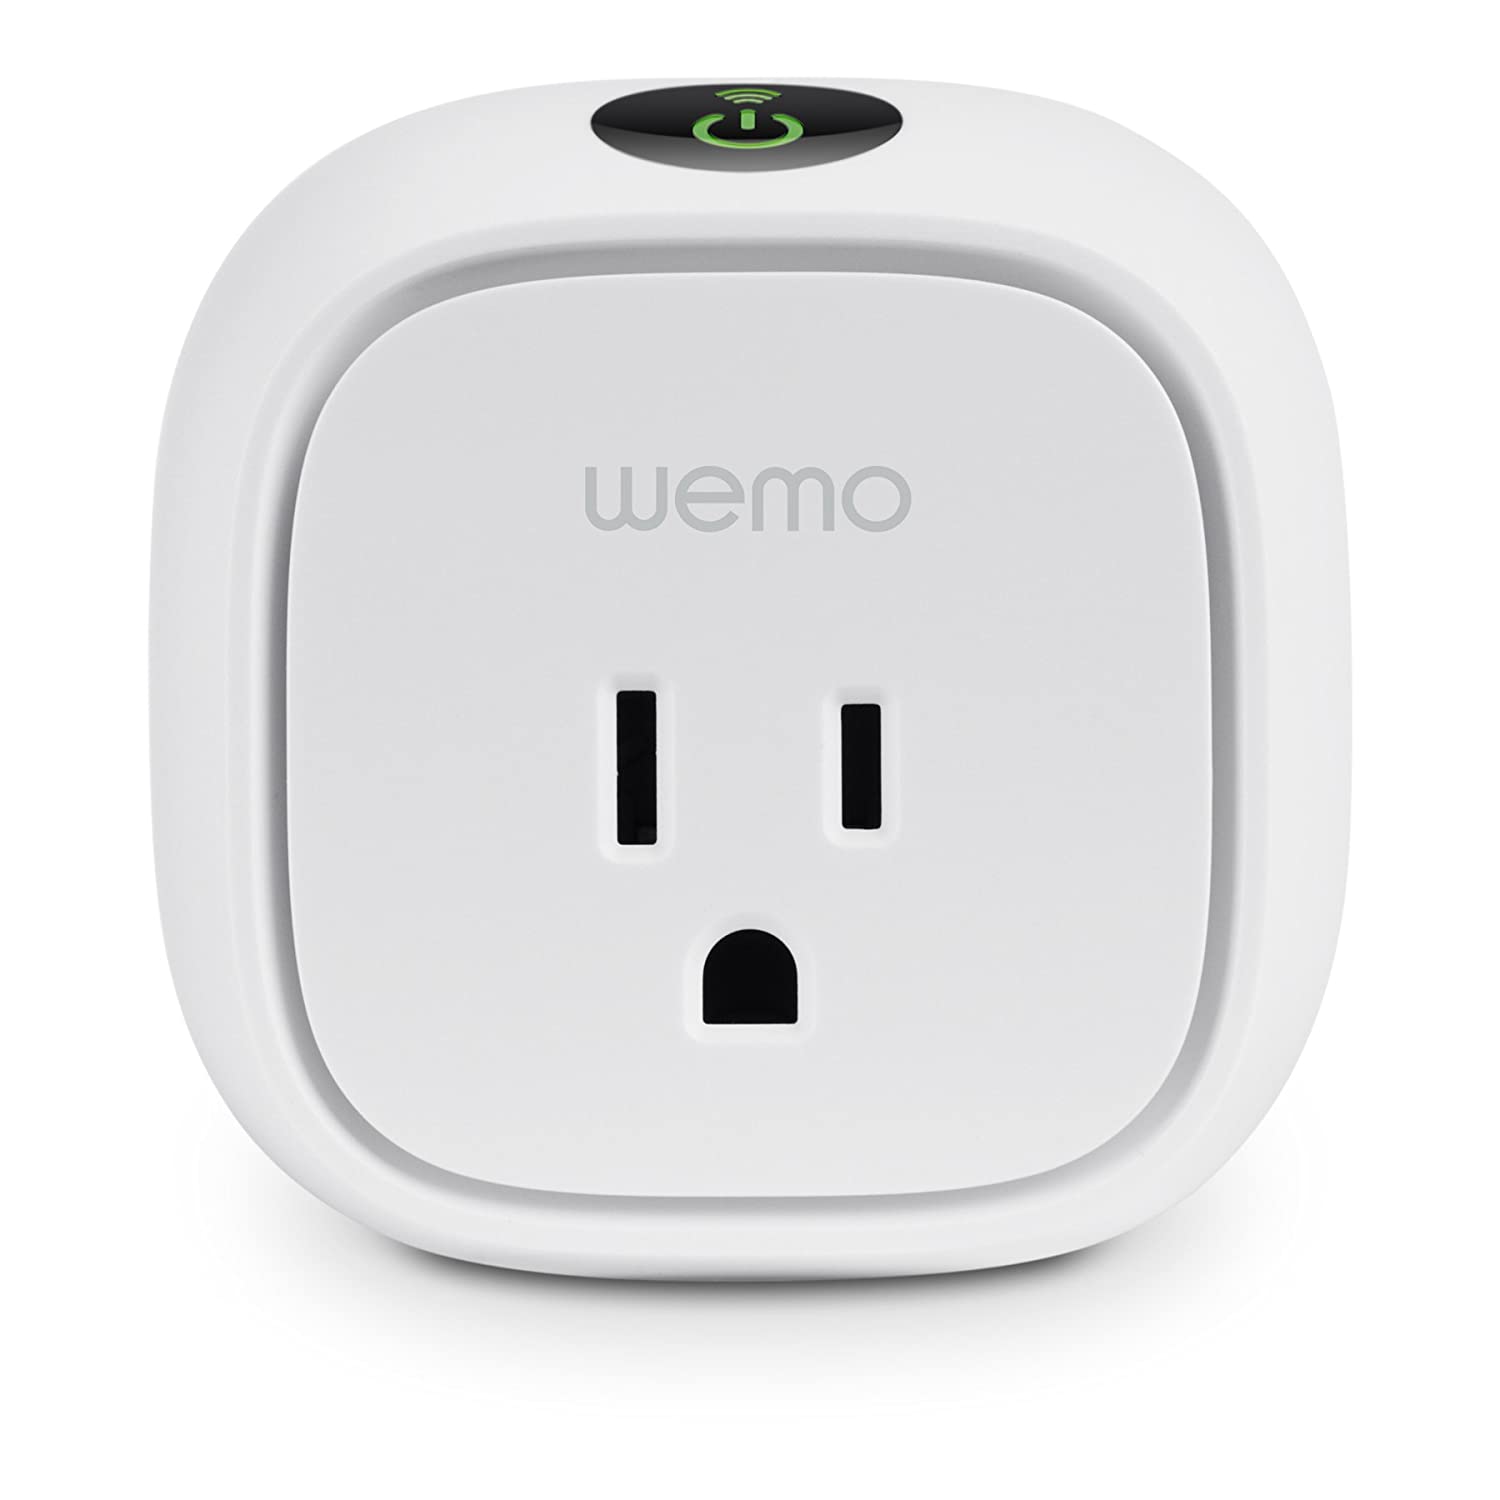 Best Smart Home Devices for 2020 - Belkin WeMo Insight Smart Plug